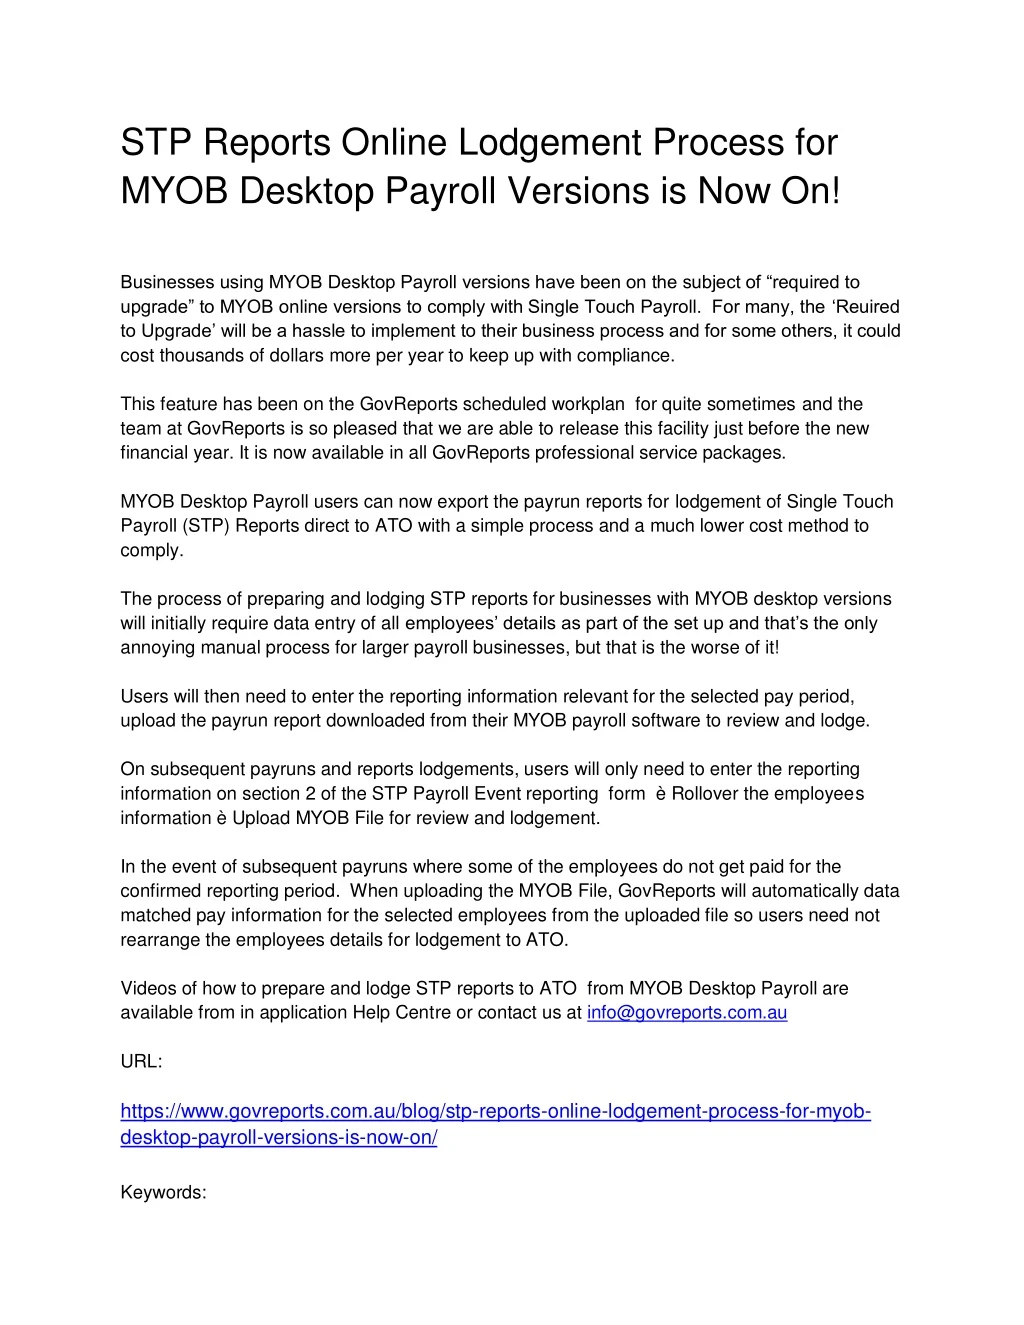 stp reports online lodgement process for myob